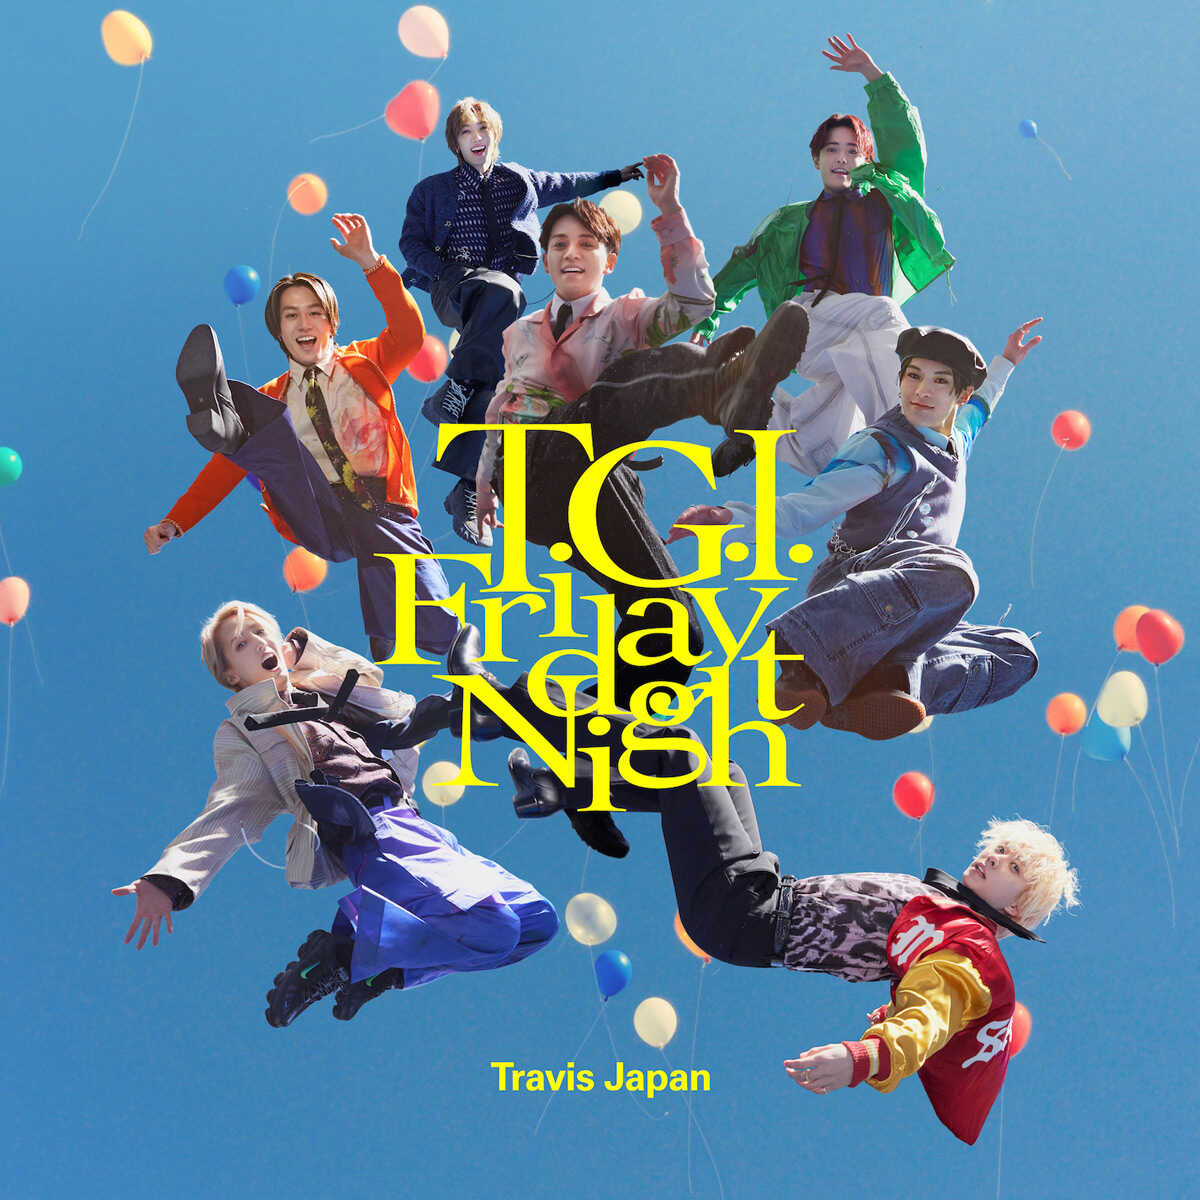 Travis Japan 最新曲「T.G.I. Friday Night」オリコン週間デジタルシングル初登場1位!